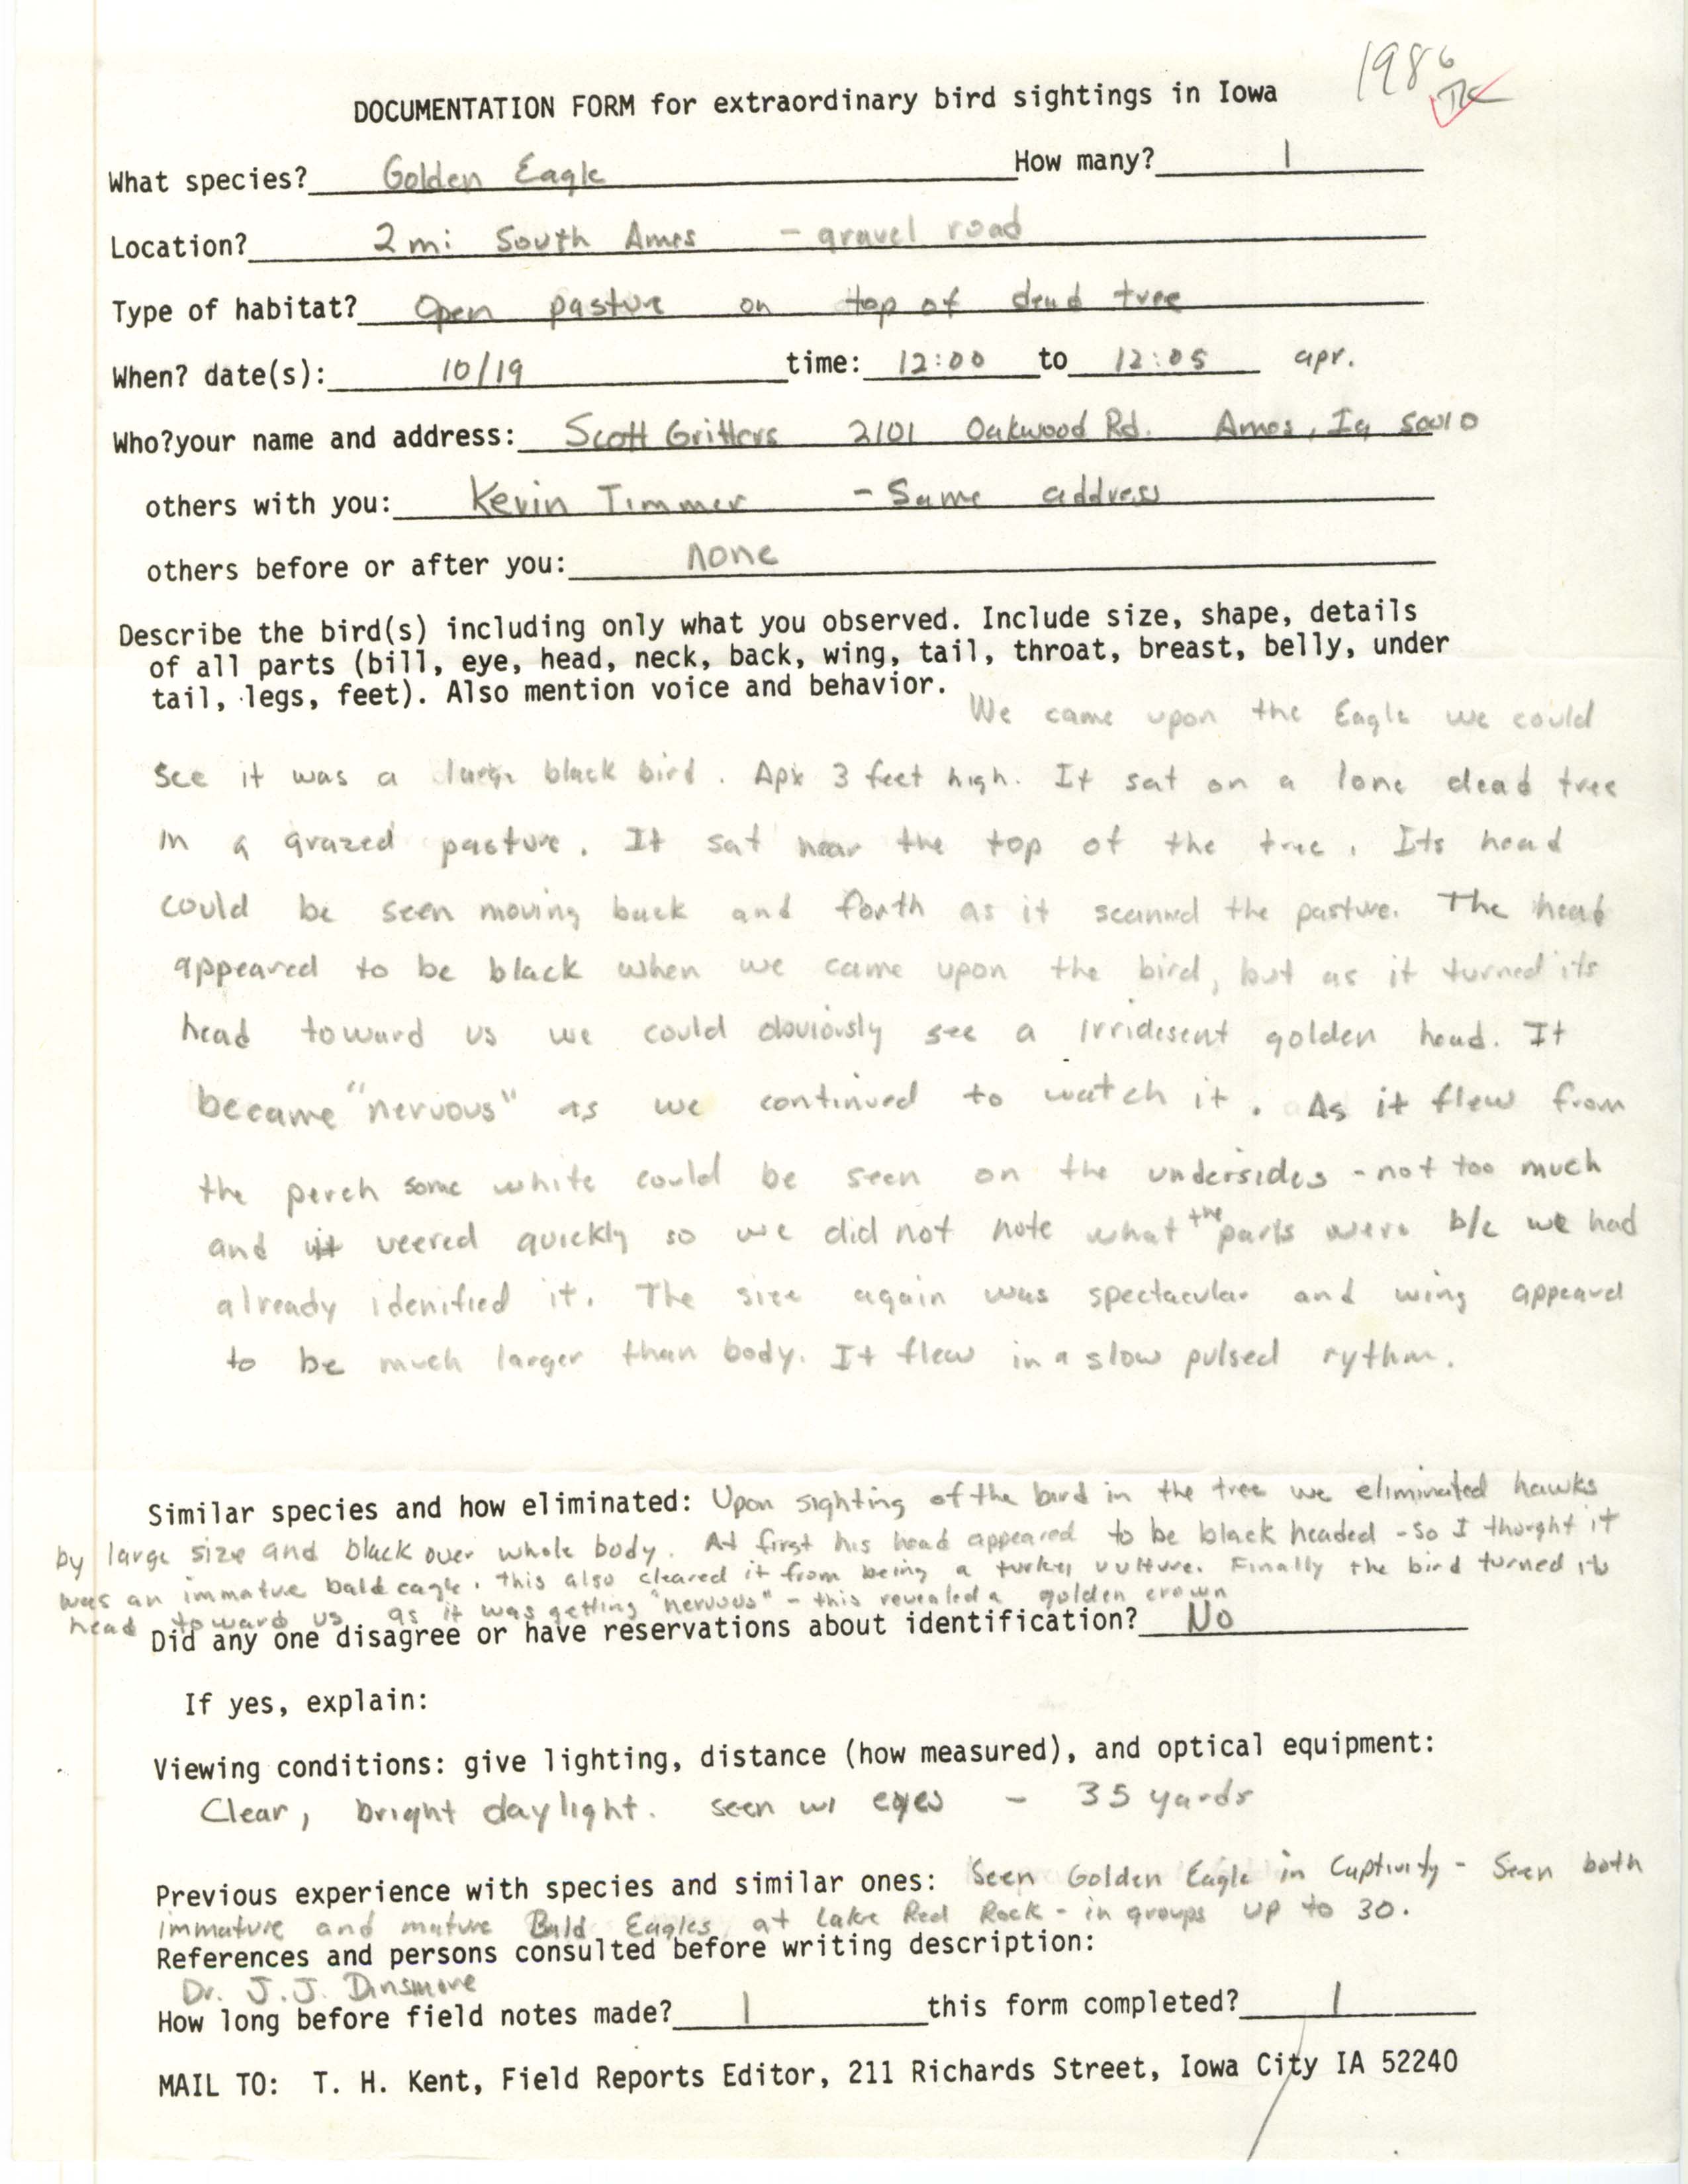 Rare bird documentation form for Golden Eagle at Ames, 1986